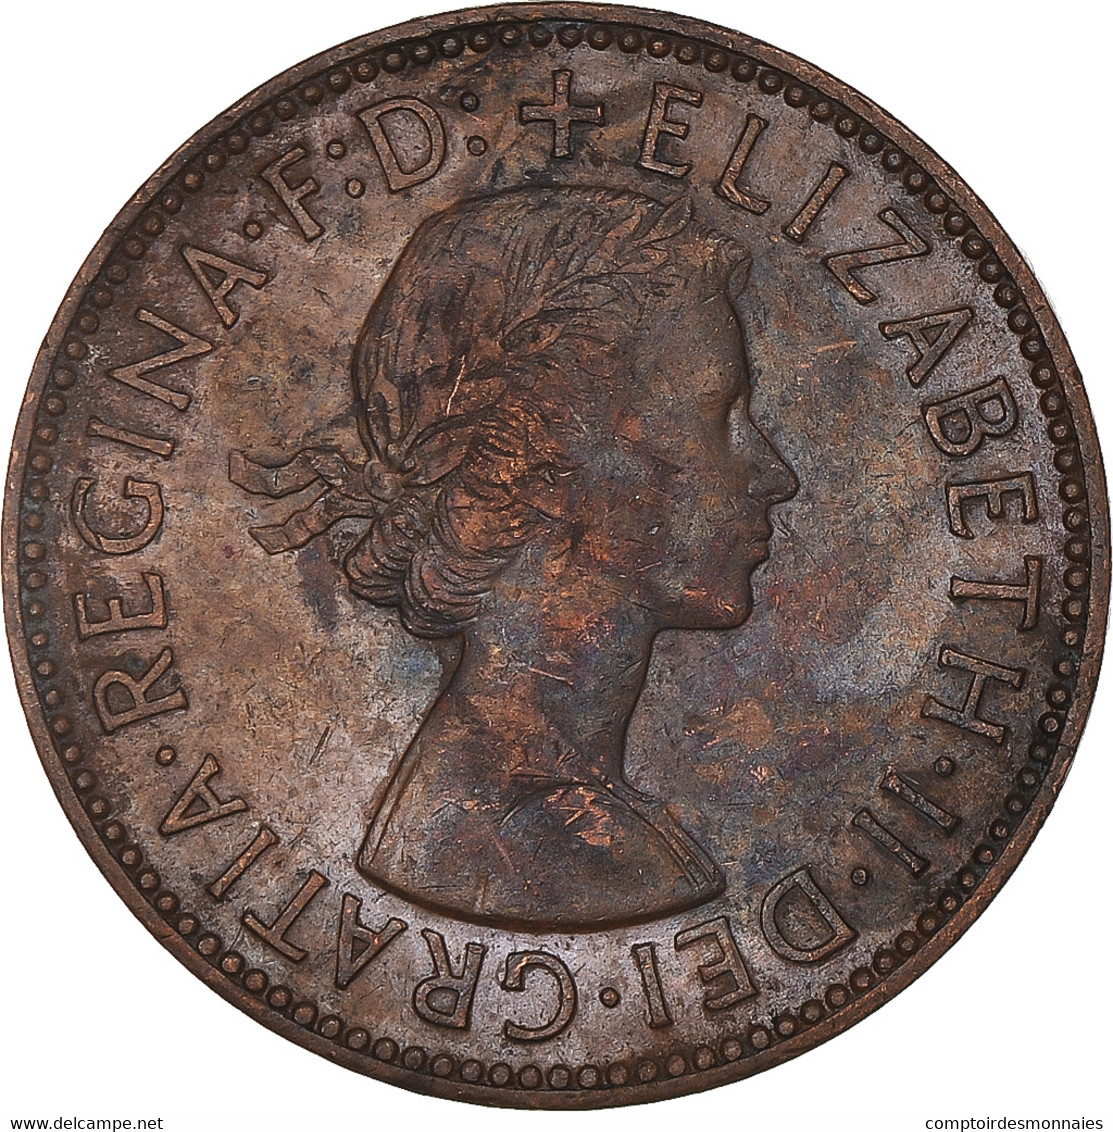 Monnaie, Grande-Bretagne, Elizabeth II, 1/2 Penny, 1963, TB+, Bronze, KM:896 - C. 1/2 Penny